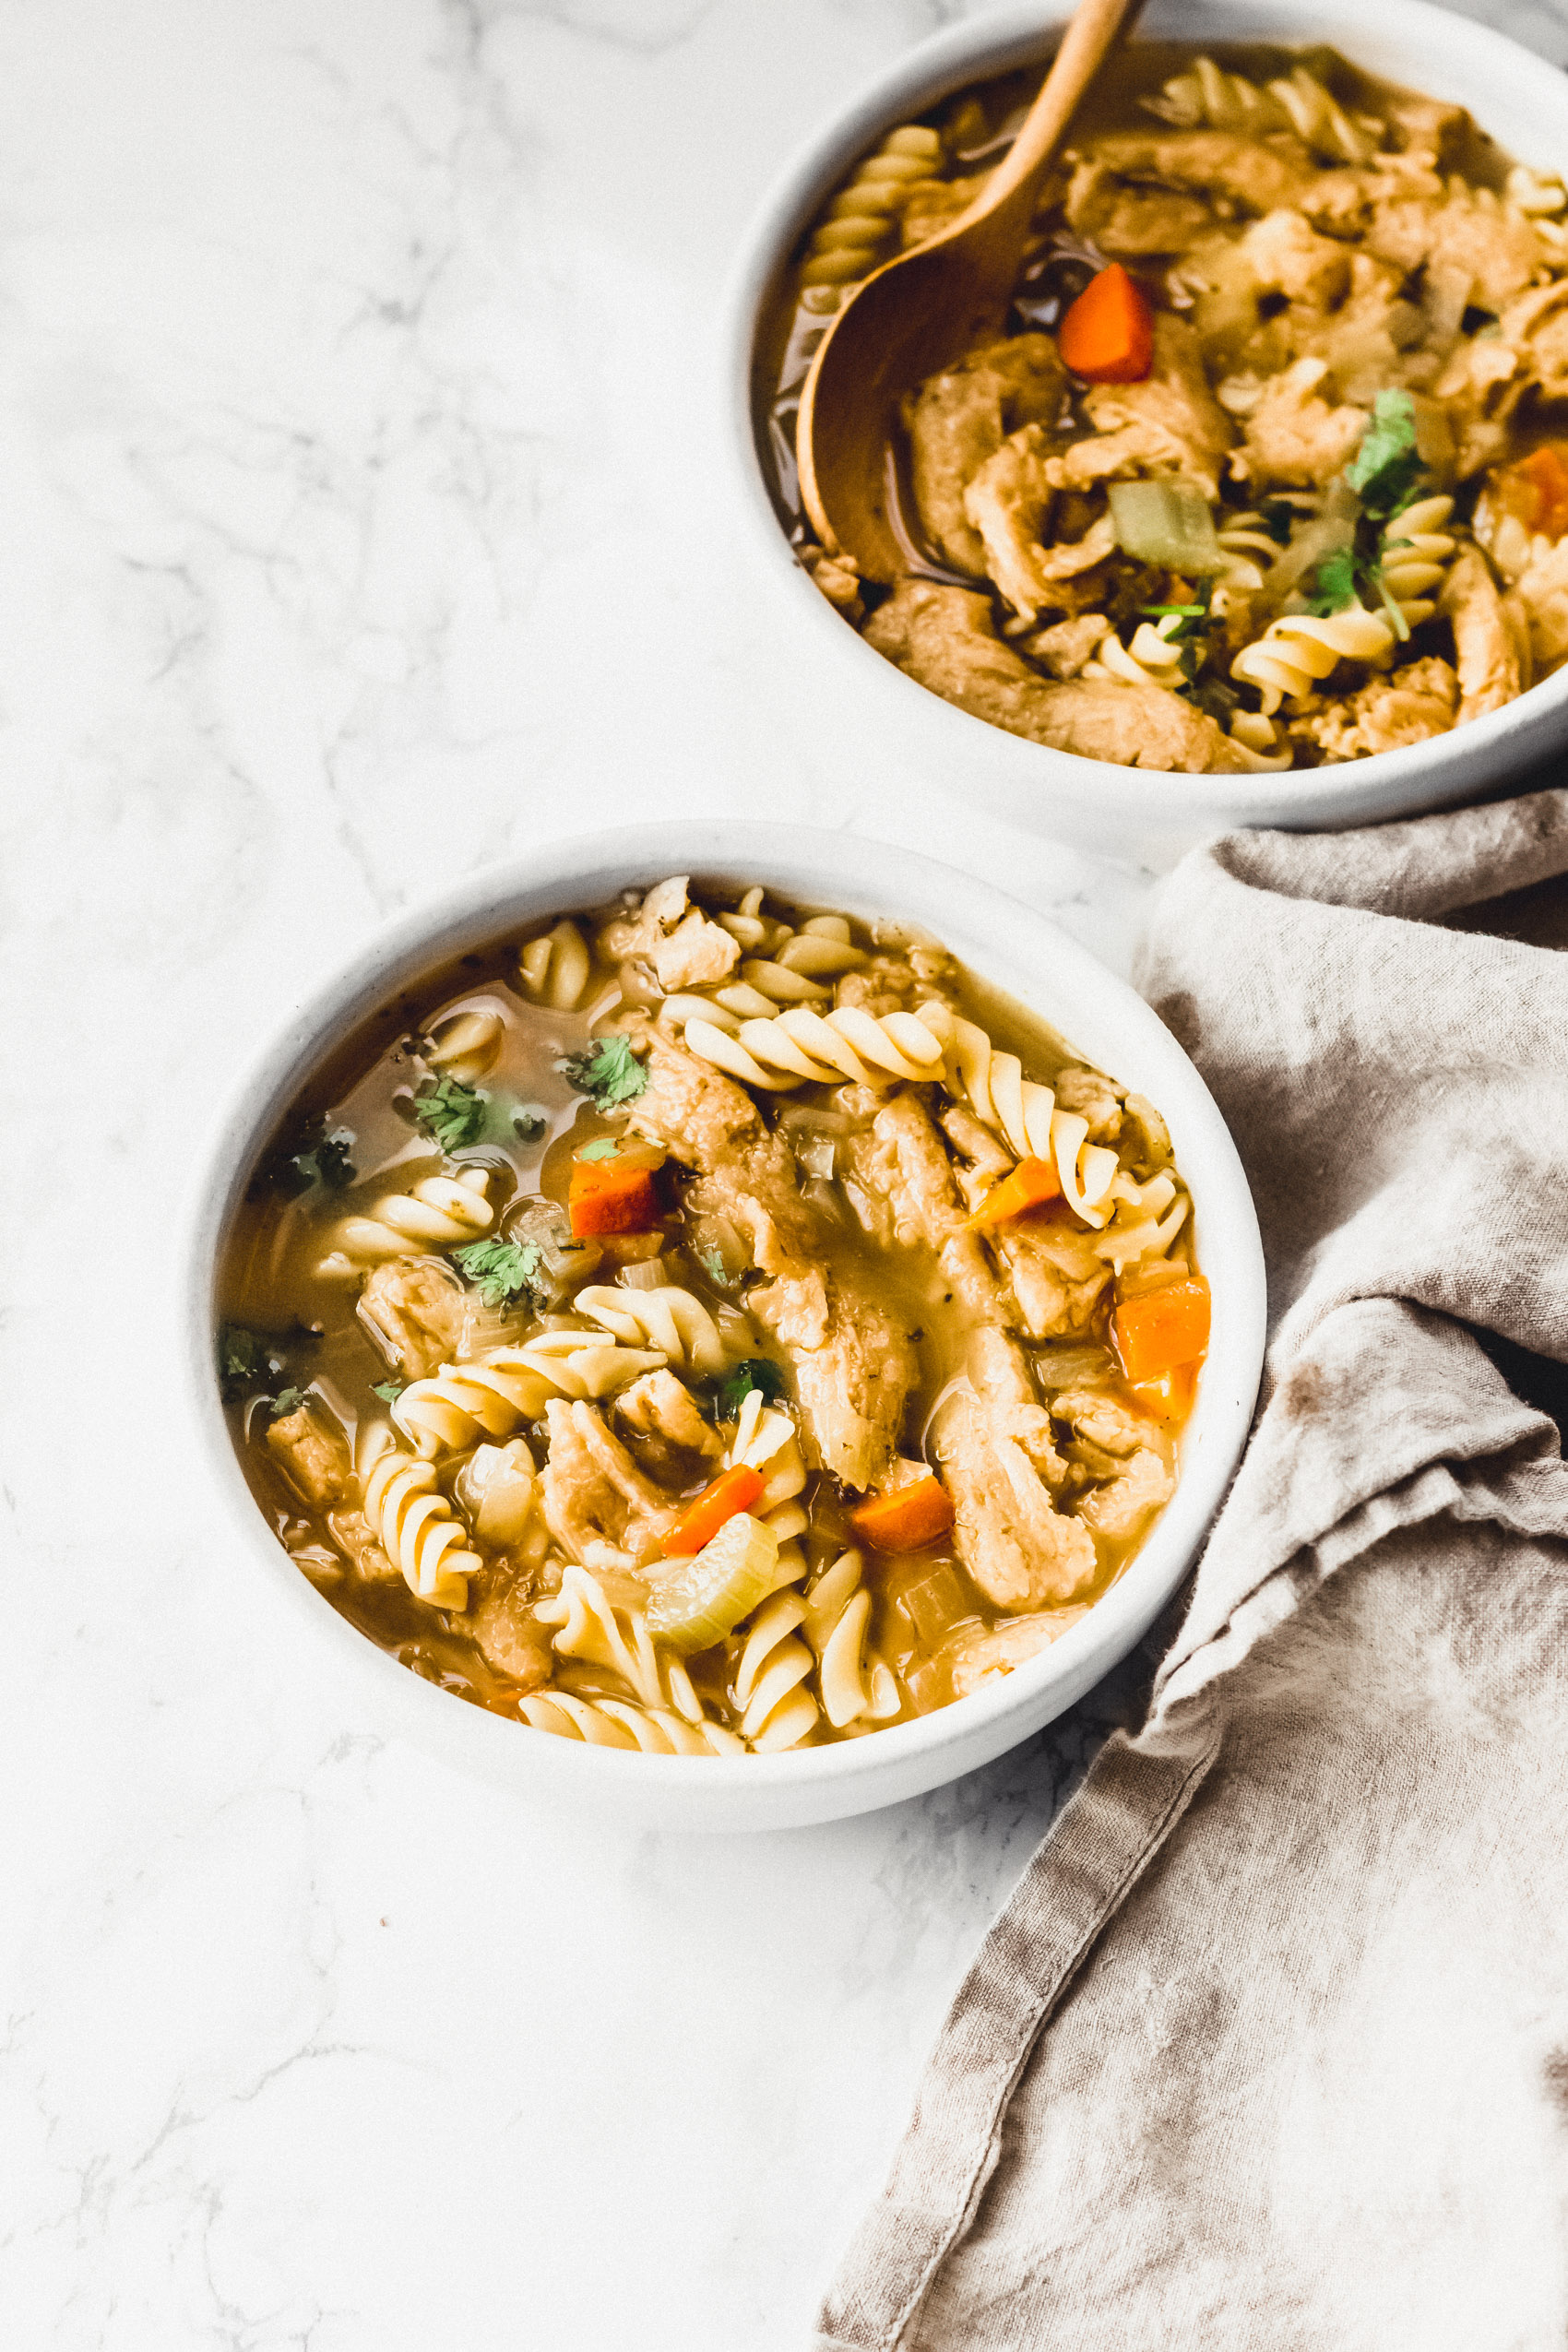 https://www.emilieeats.com/wp-content/uploads/2022/01/vegan-chicken-noodle-soup-plant-based-dinner-recipe-2.jpg